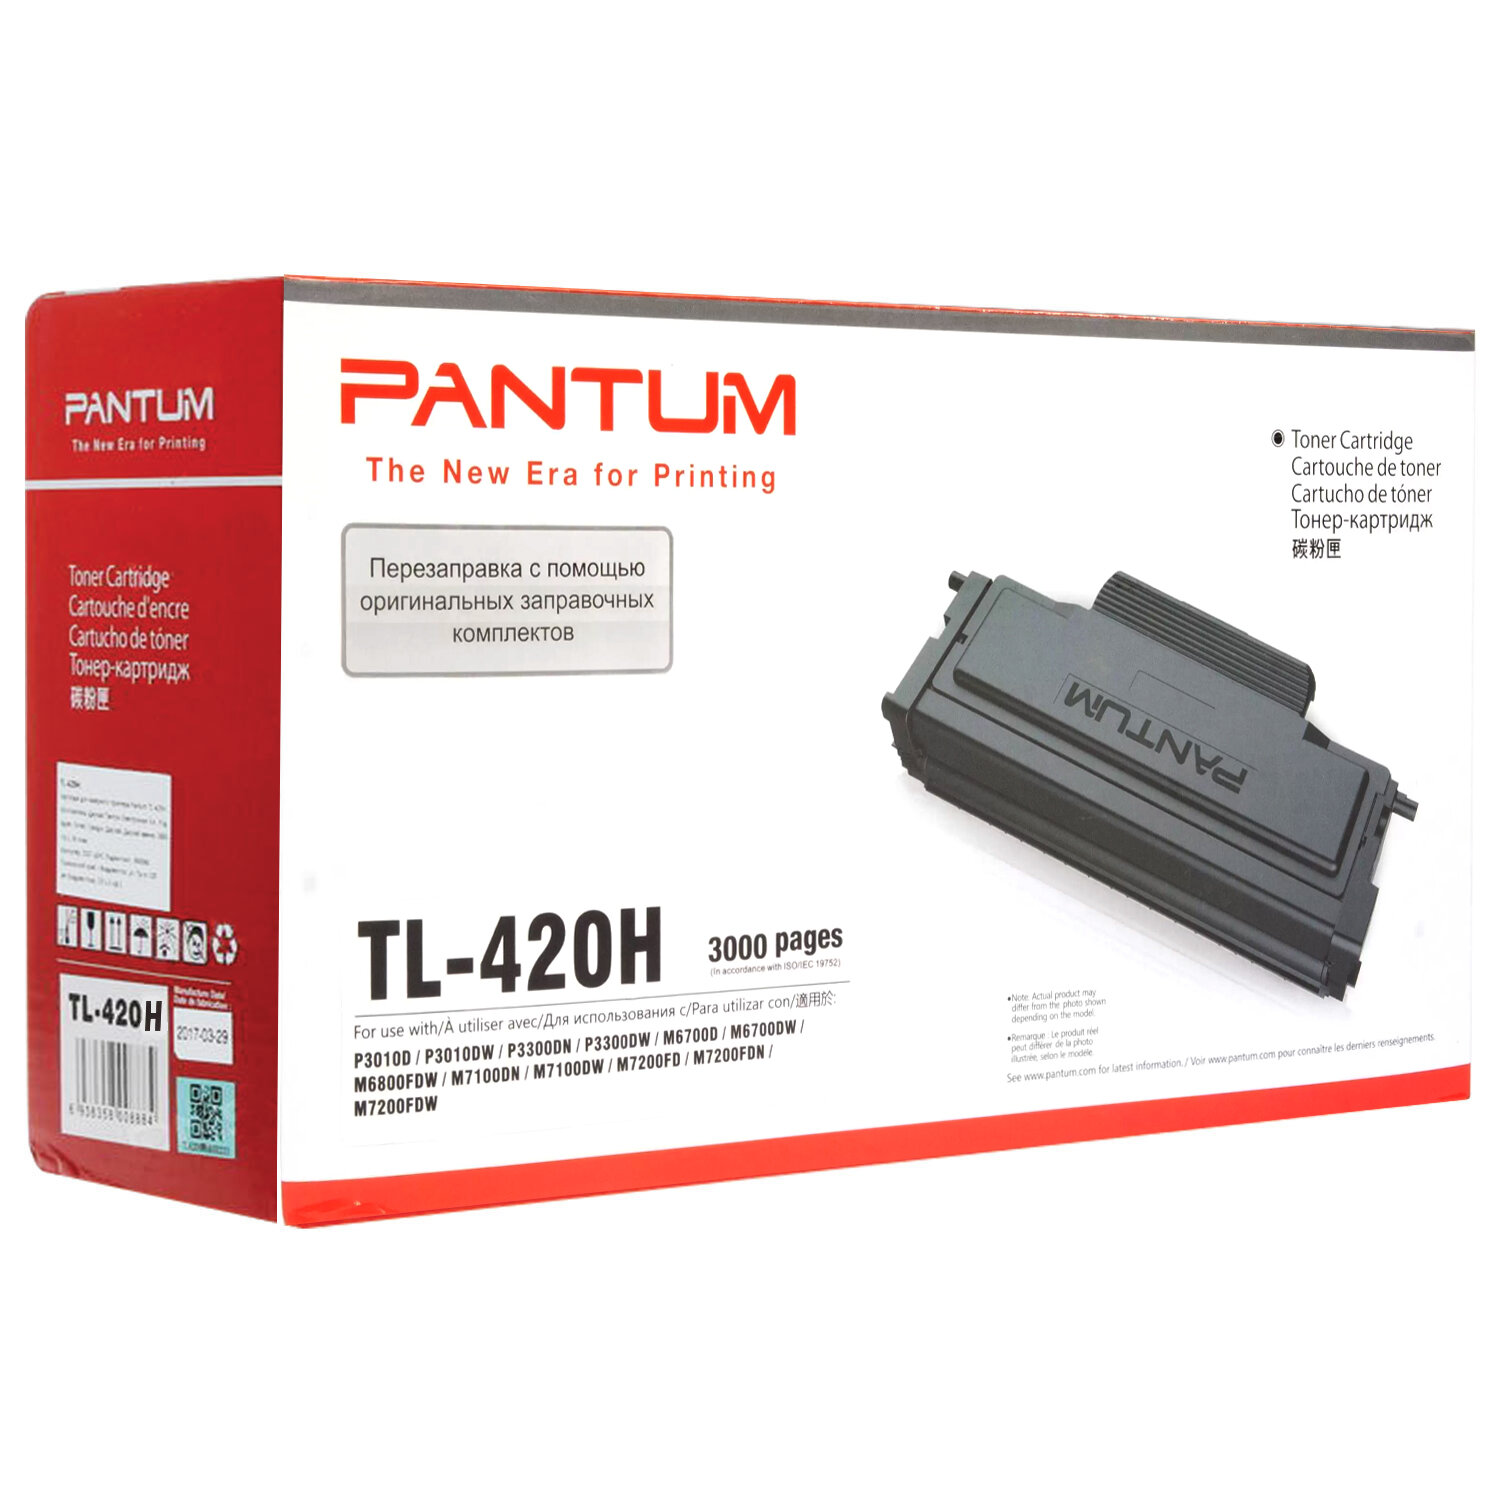 Pantum - PANTUM TL-420H